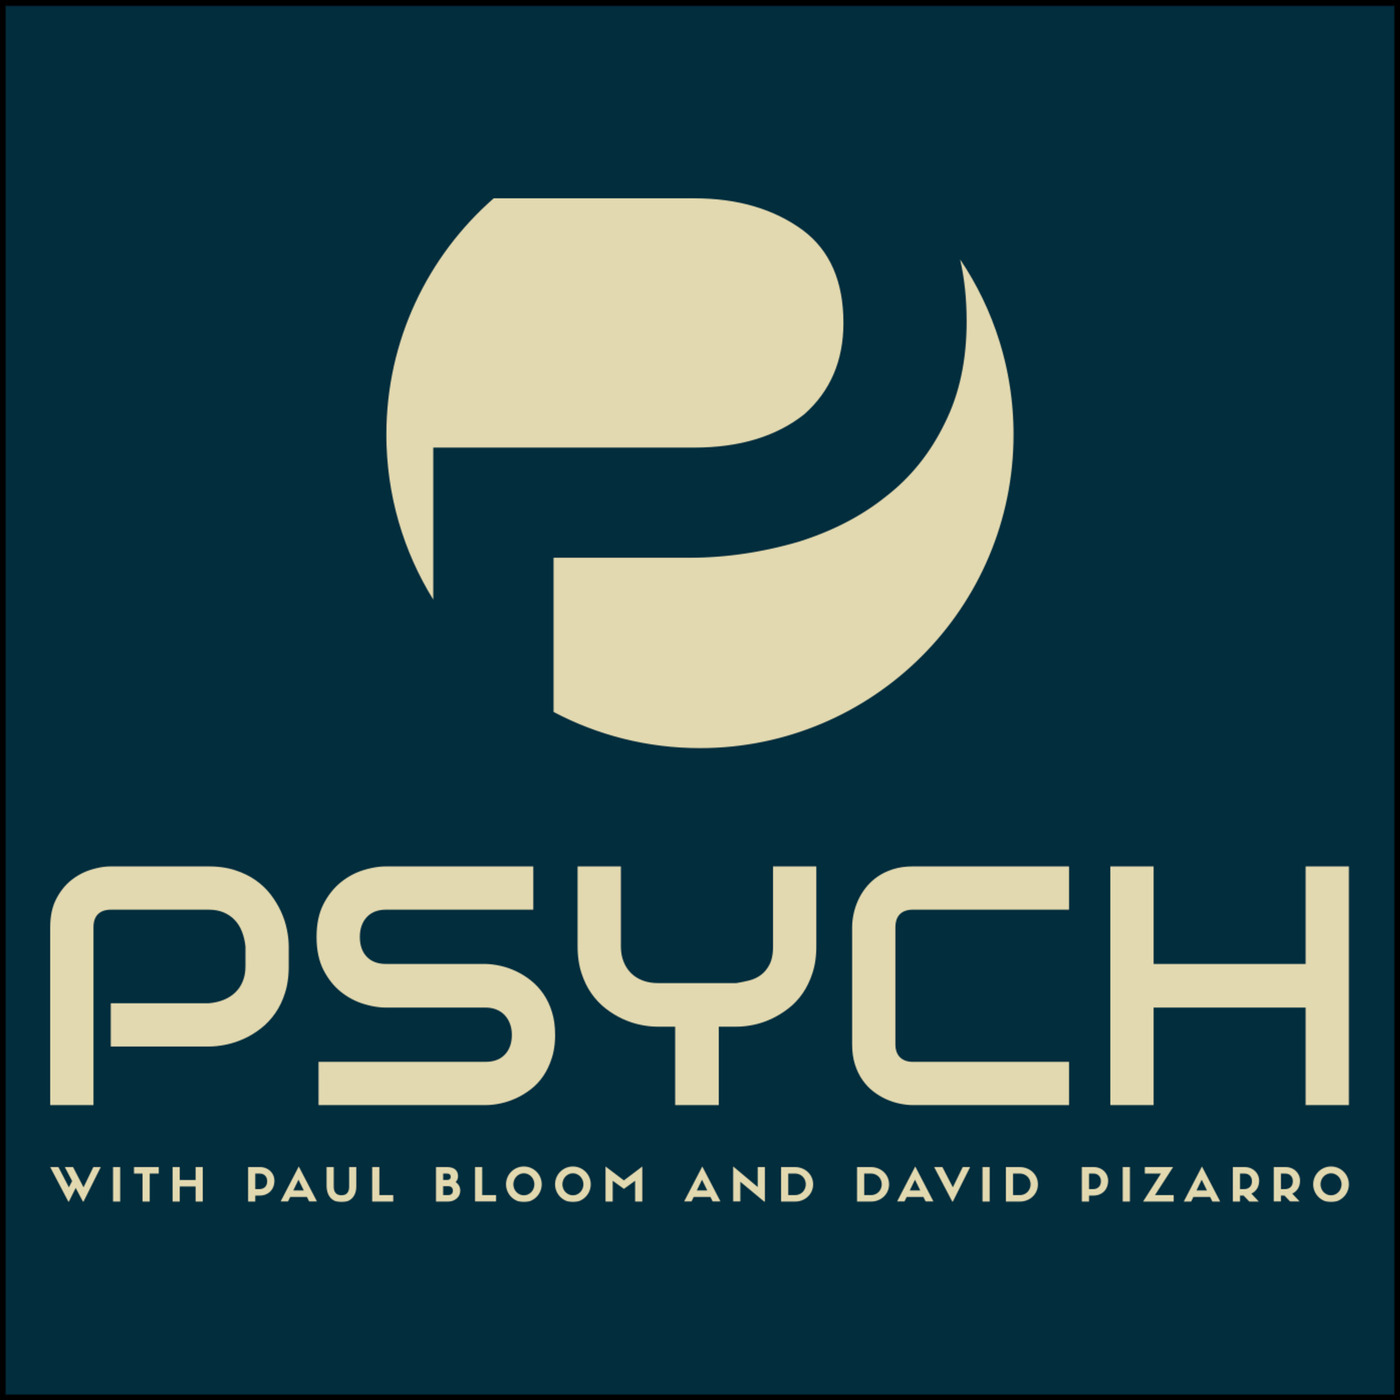 Jean Piaget • Podcast Addict